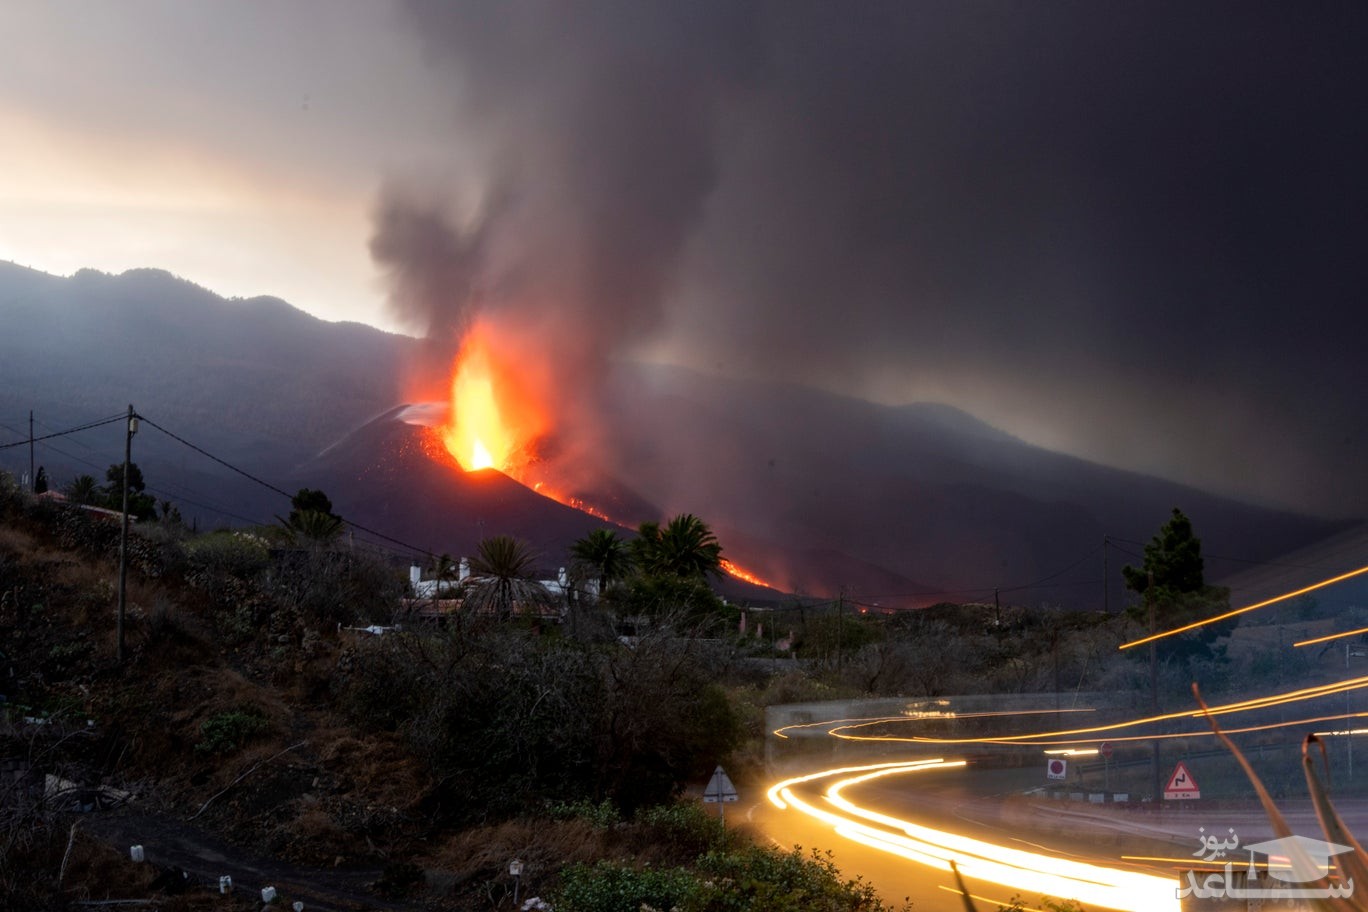 فعالیت آتشفشانی در جزیره لاپالما اسپانیا/ آسوشیتدپرس